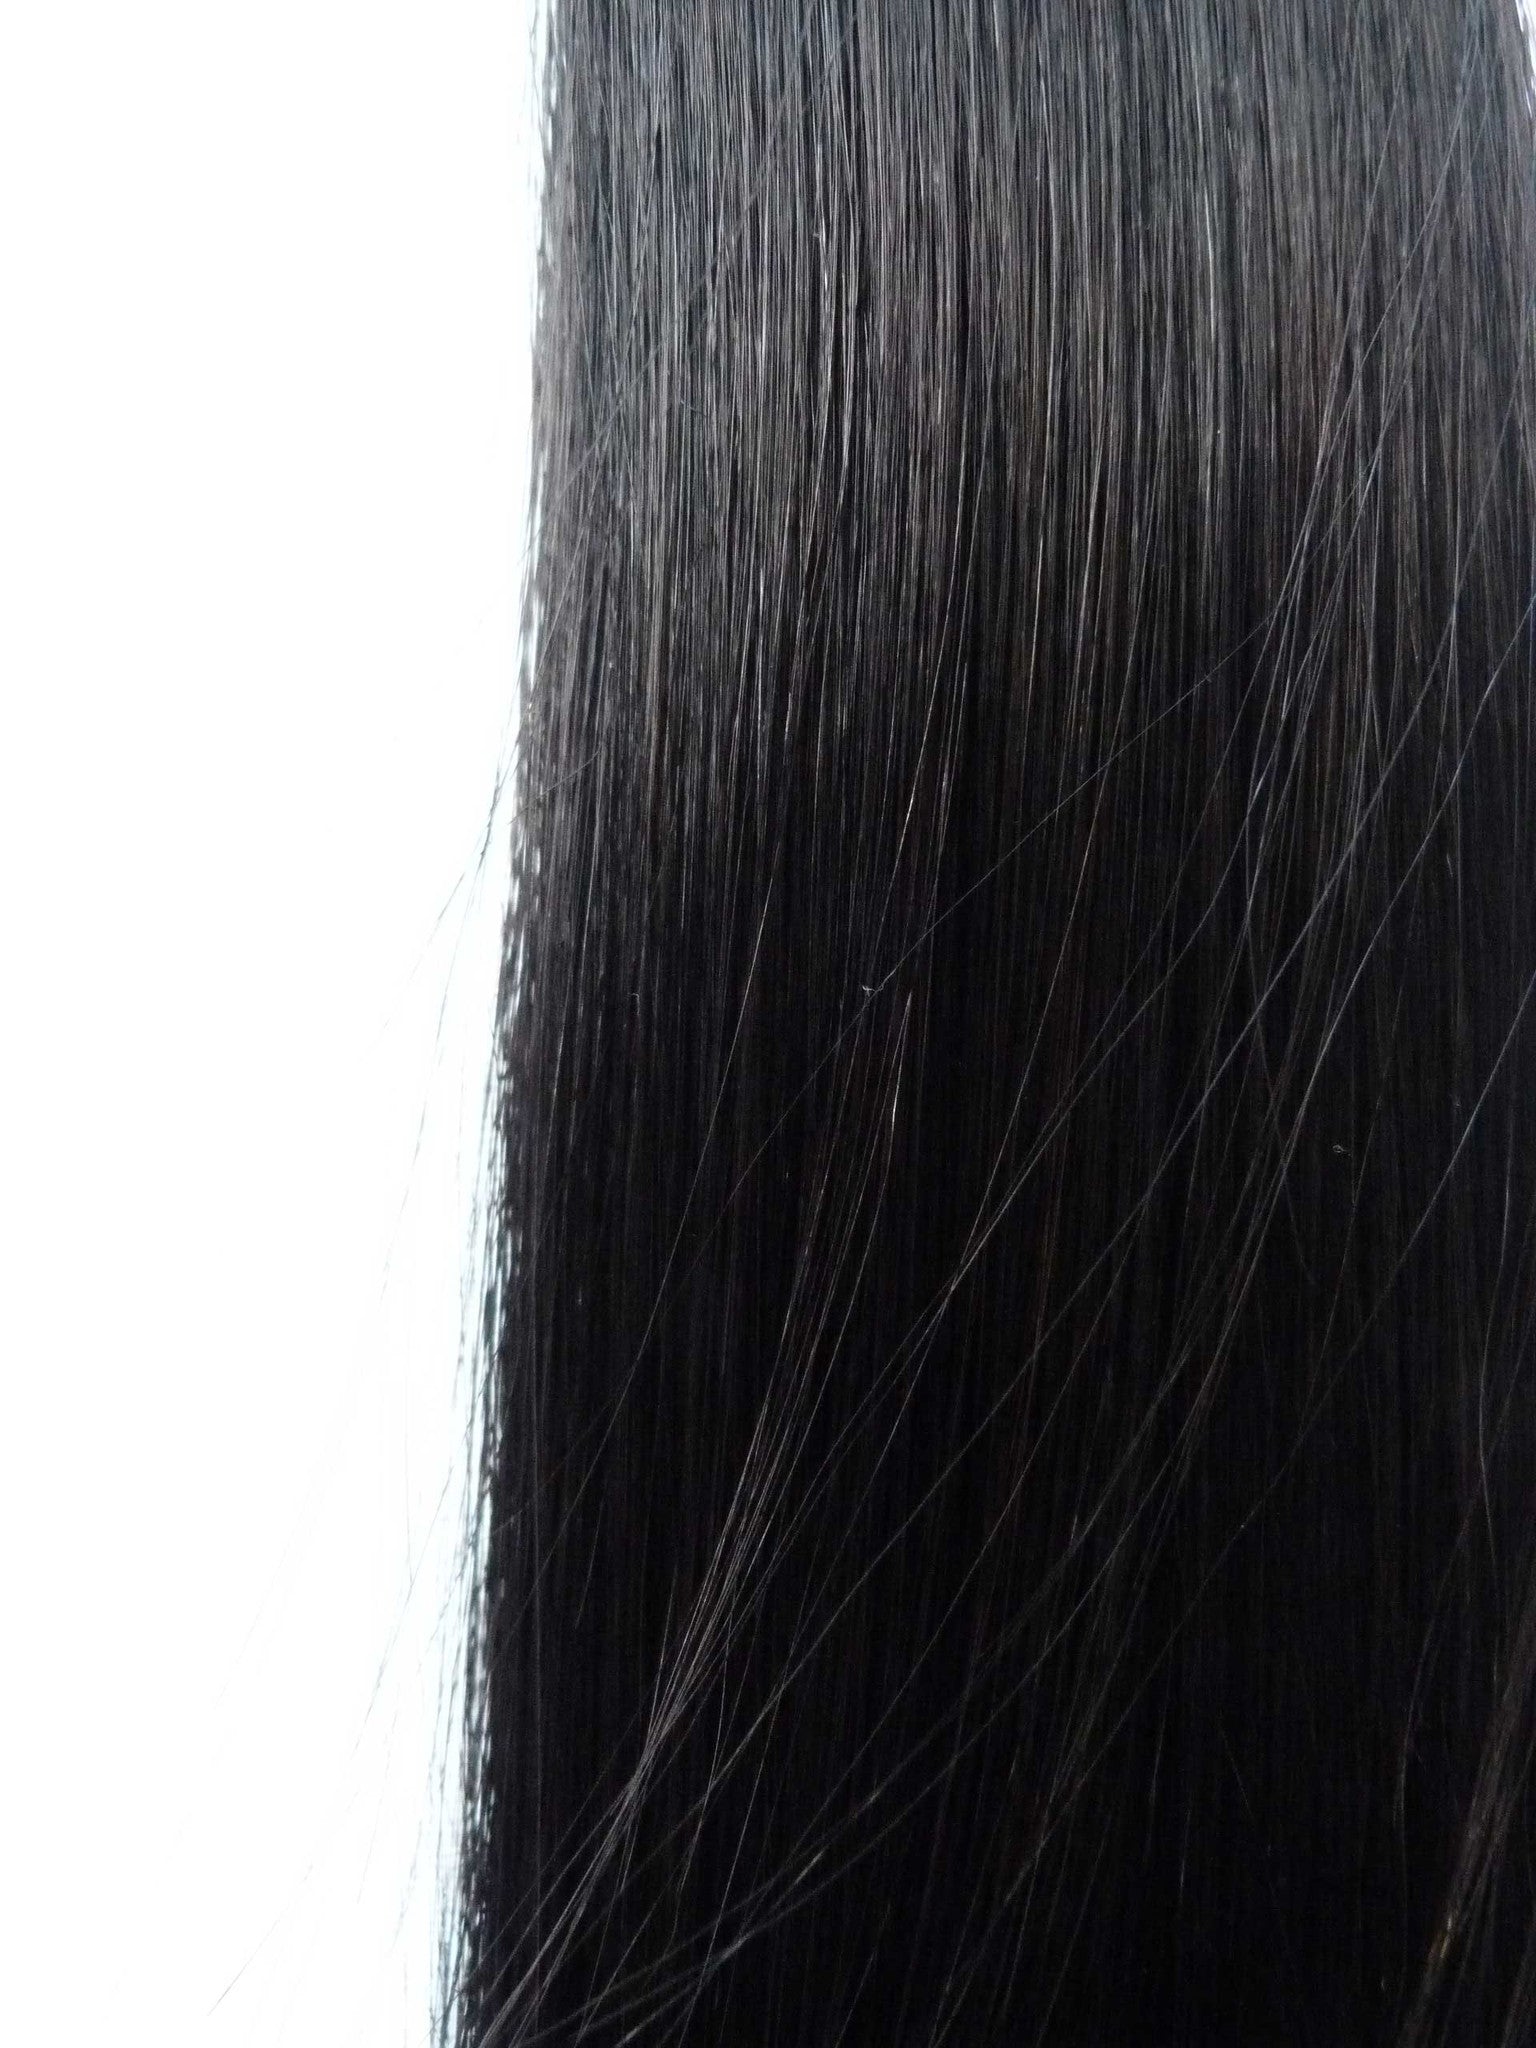 Brazilian Virgin Human Hair Extensions - Micro Loop Extensions-Virgin Hair & Beauty, The Best Hair Extensions, Real Virgin Human Hair.